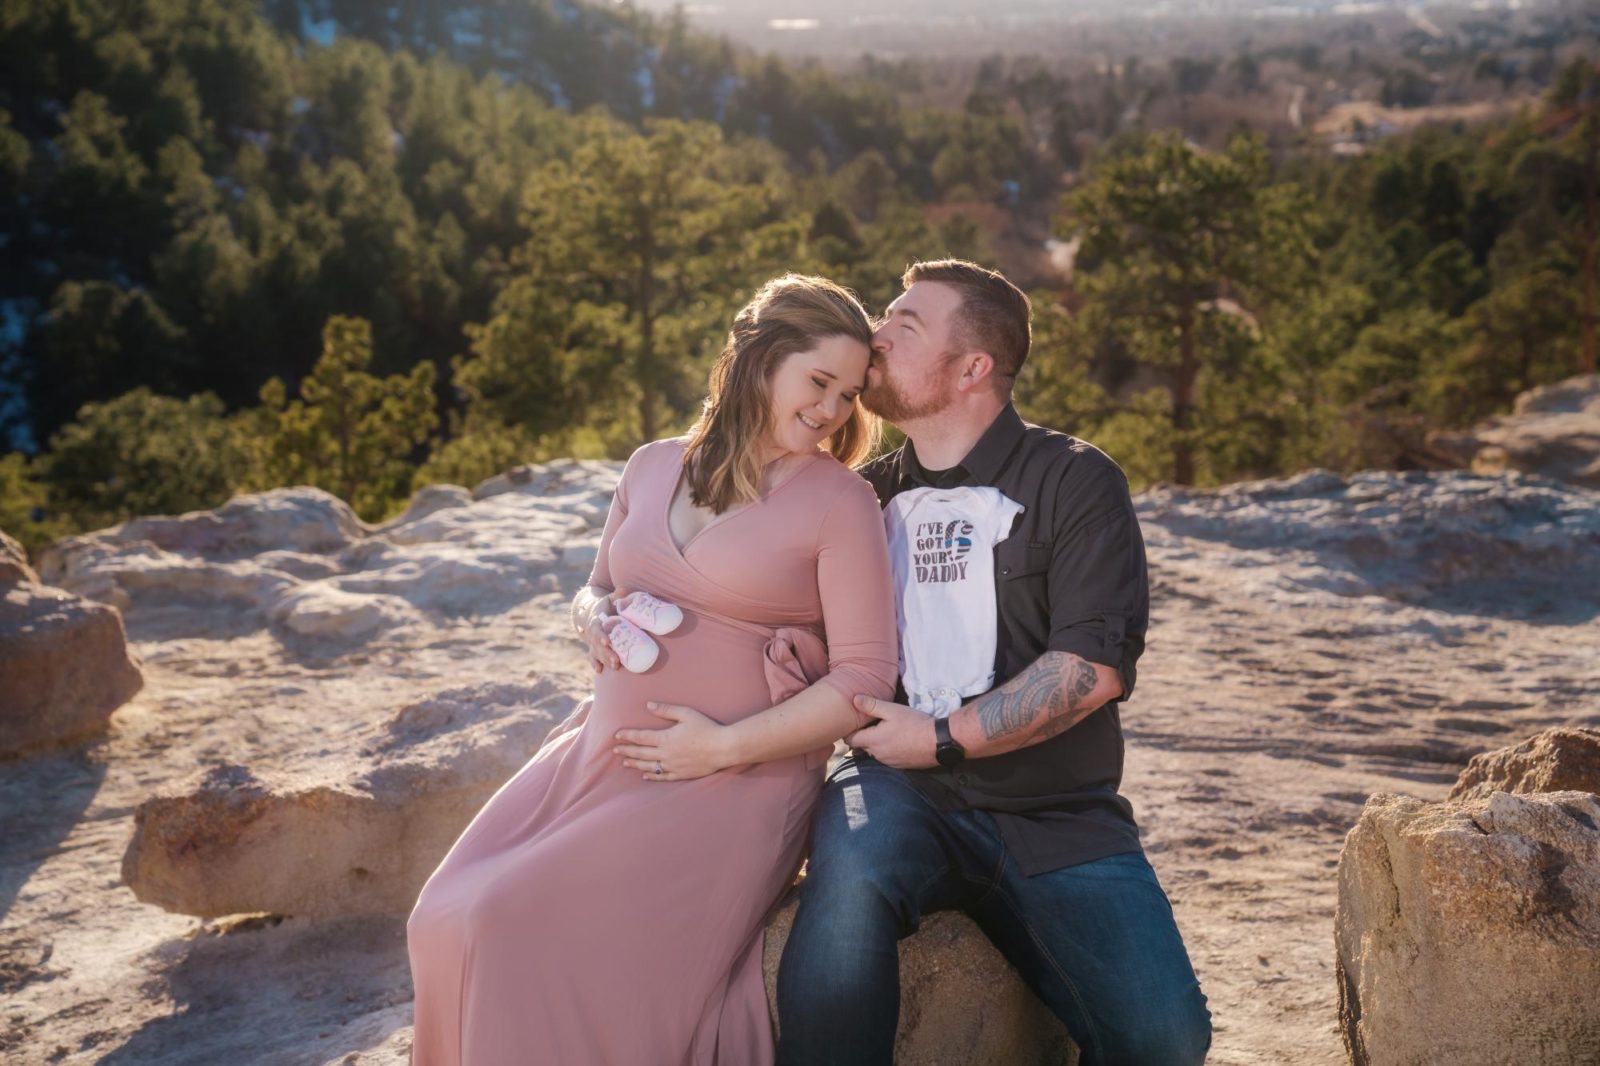 Colorado Springs Pregnancy Photography | Katie Corinne Photography's Blog